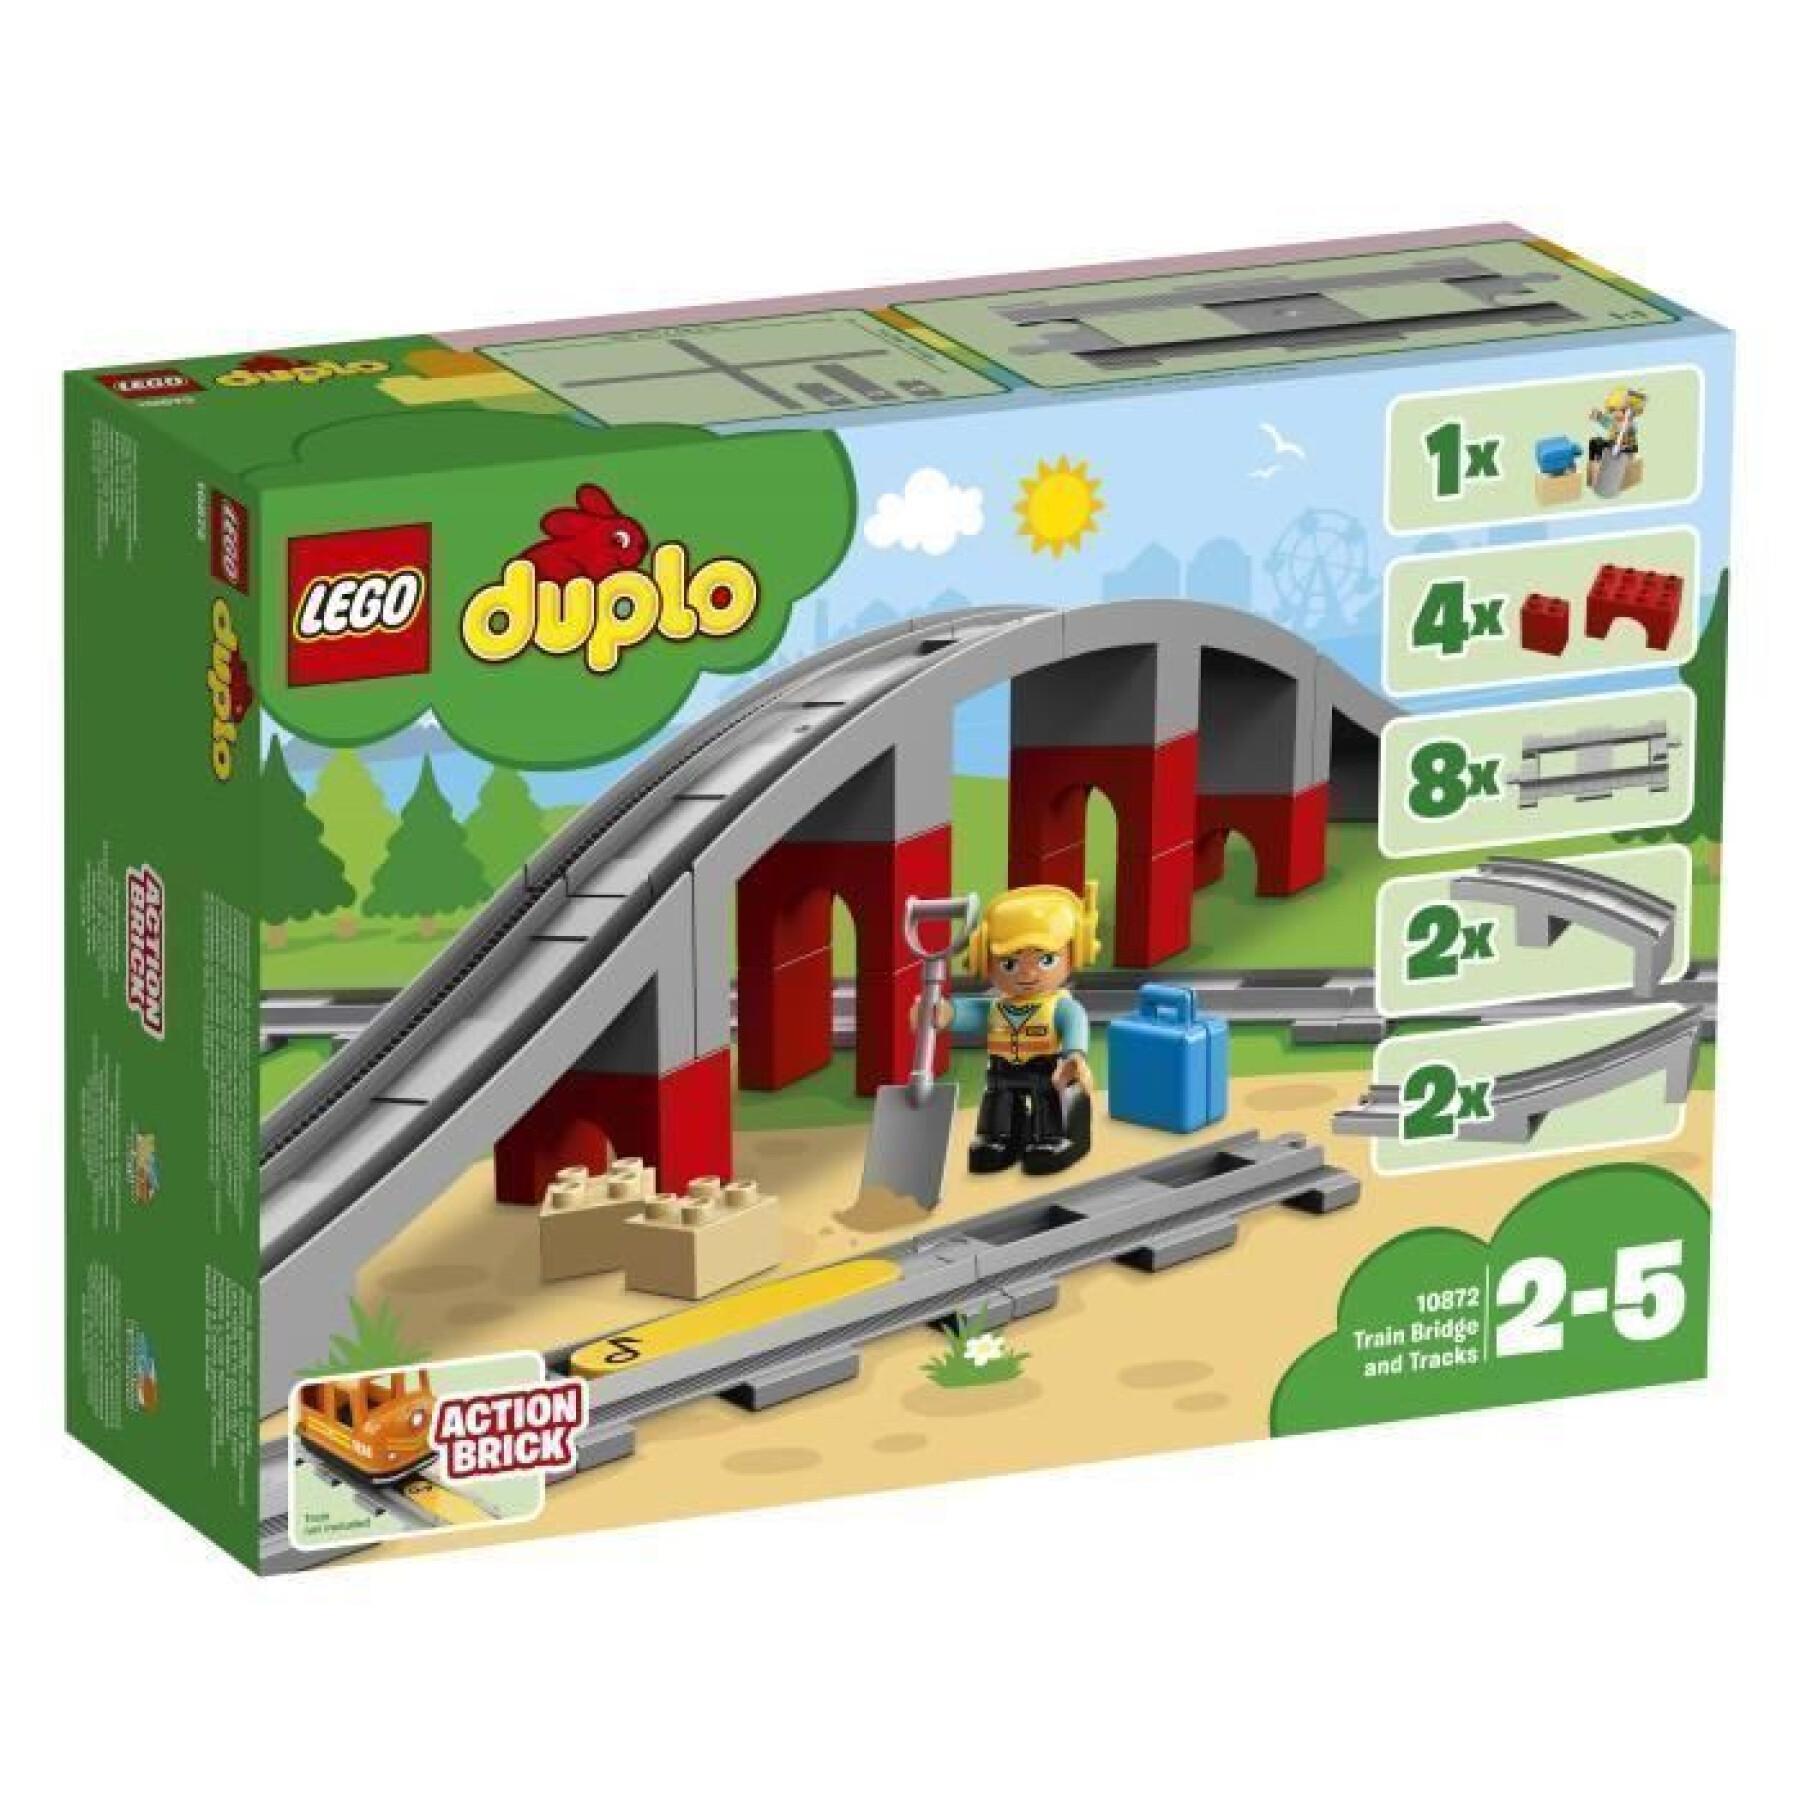 Train track and bridge building set Lego Duplo